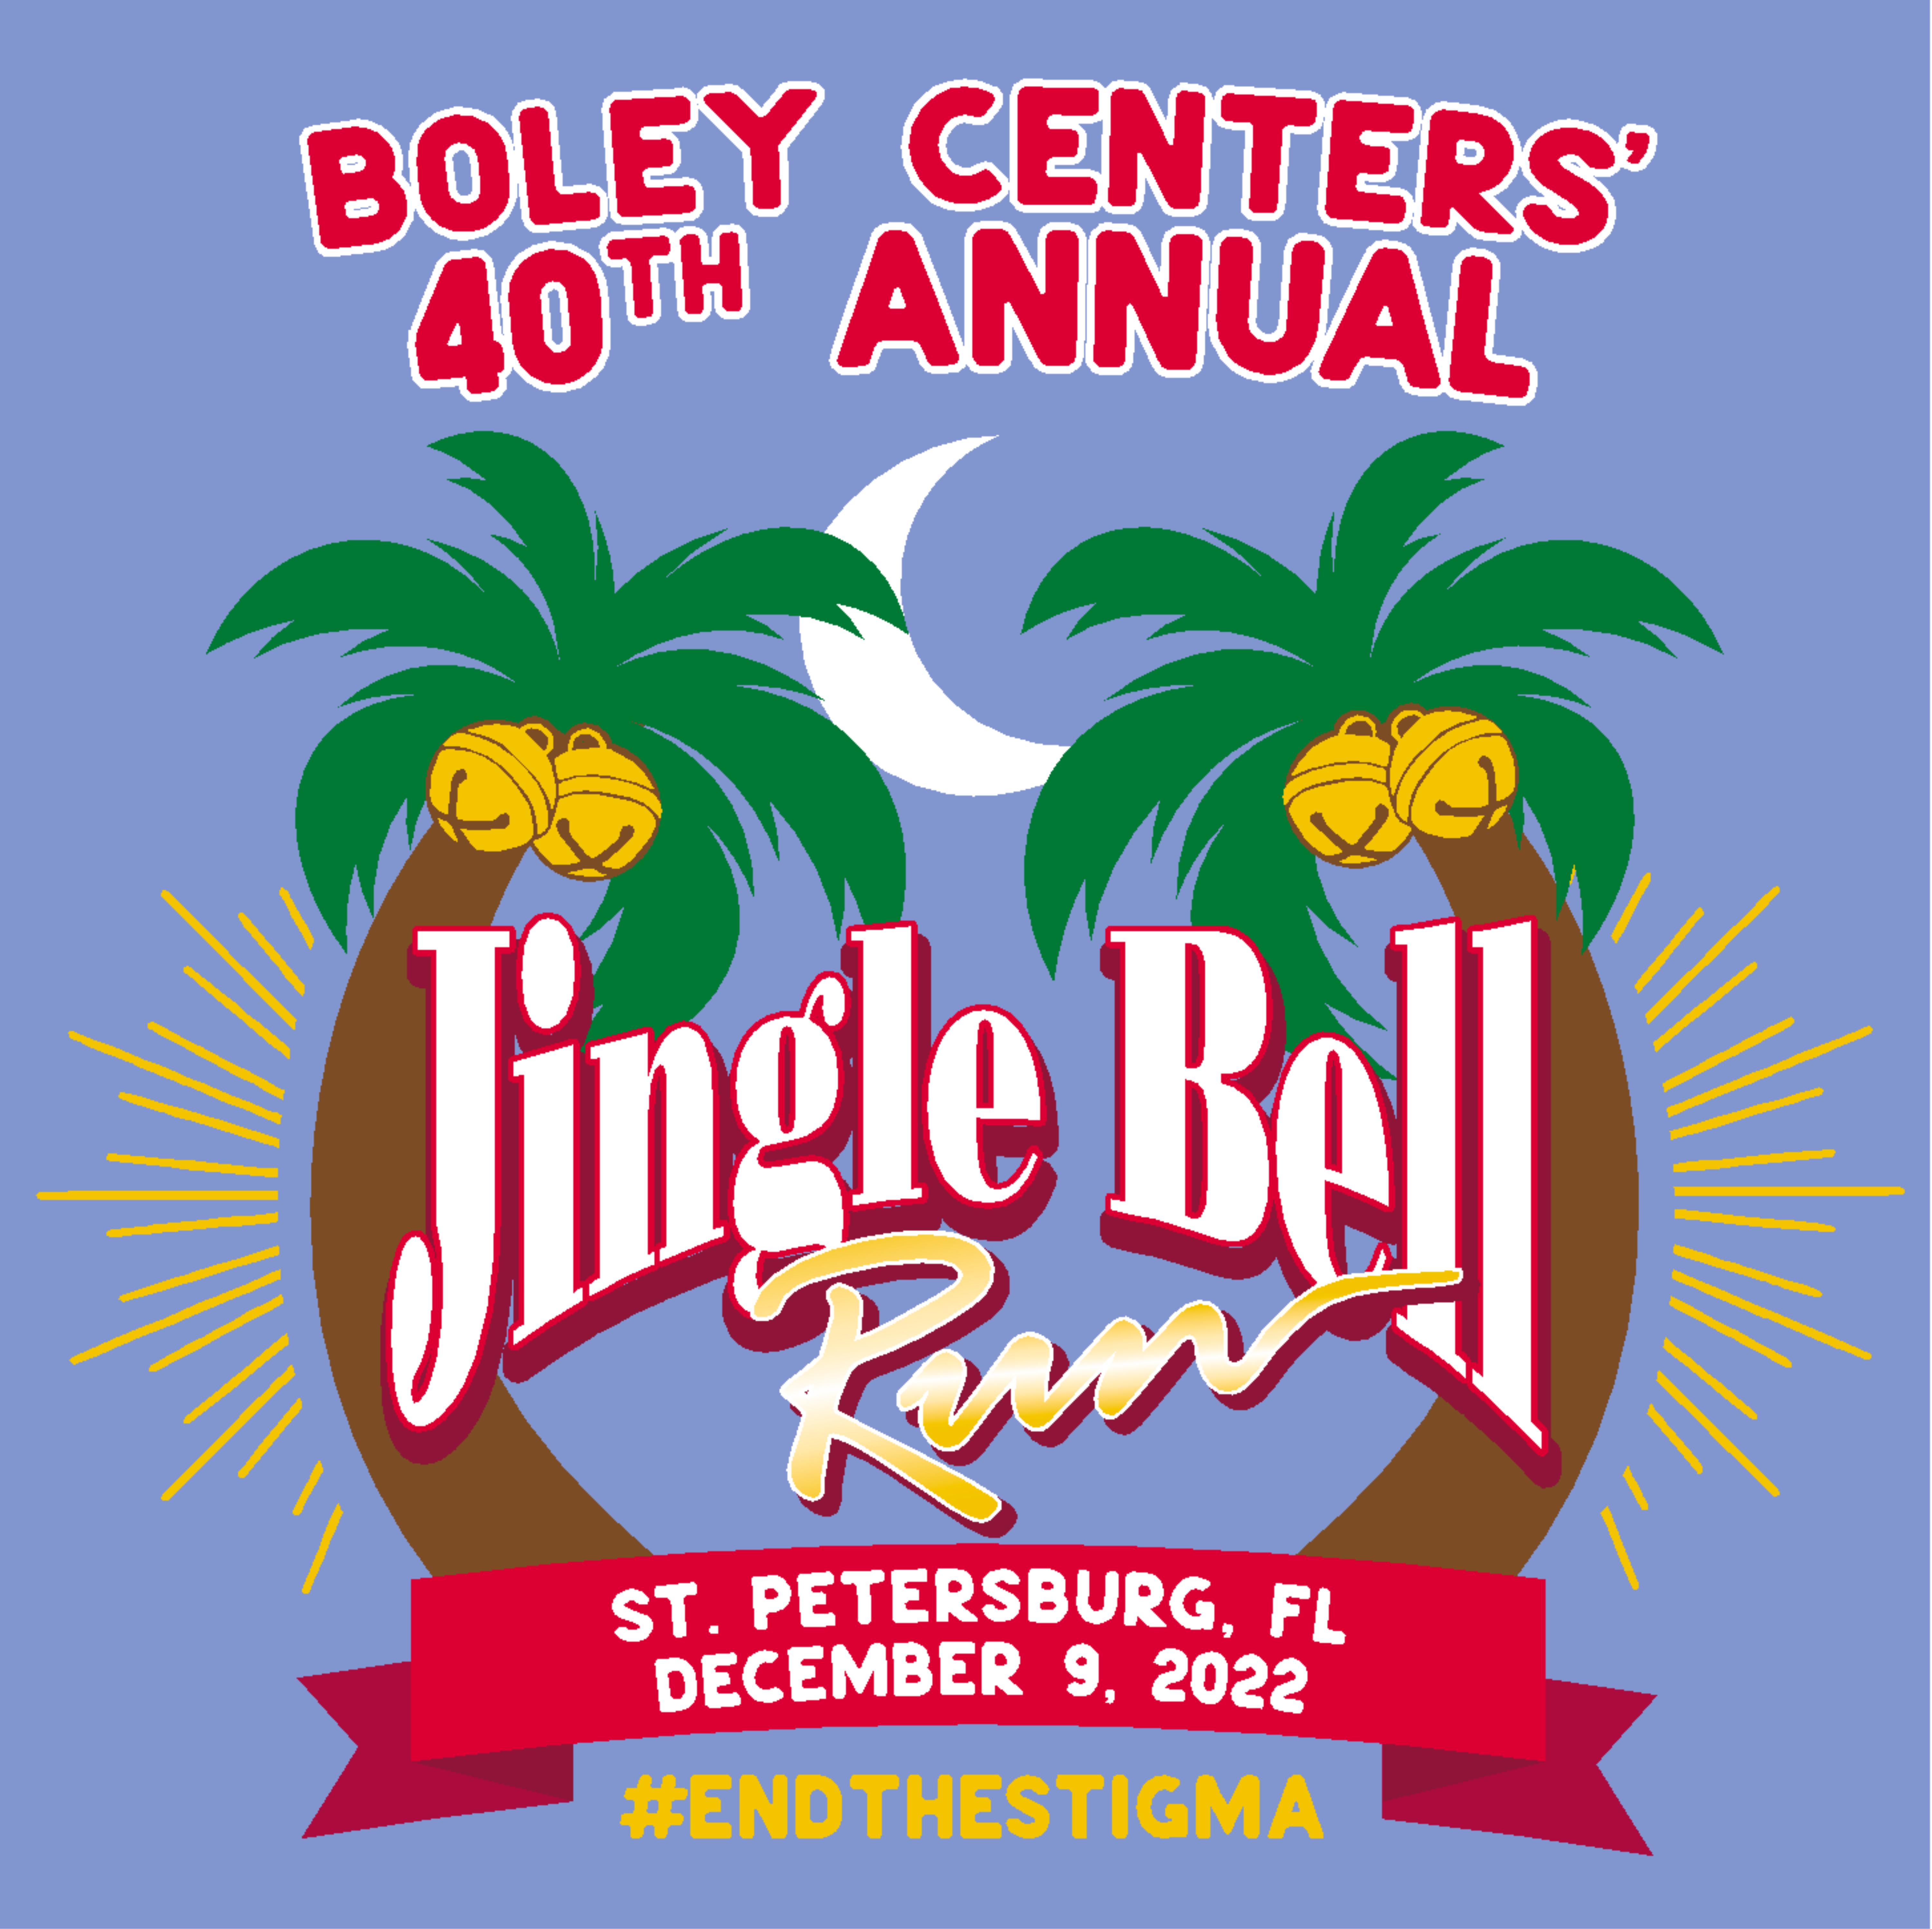 Boley Centers’ 40th Annual Jingle Bell Run